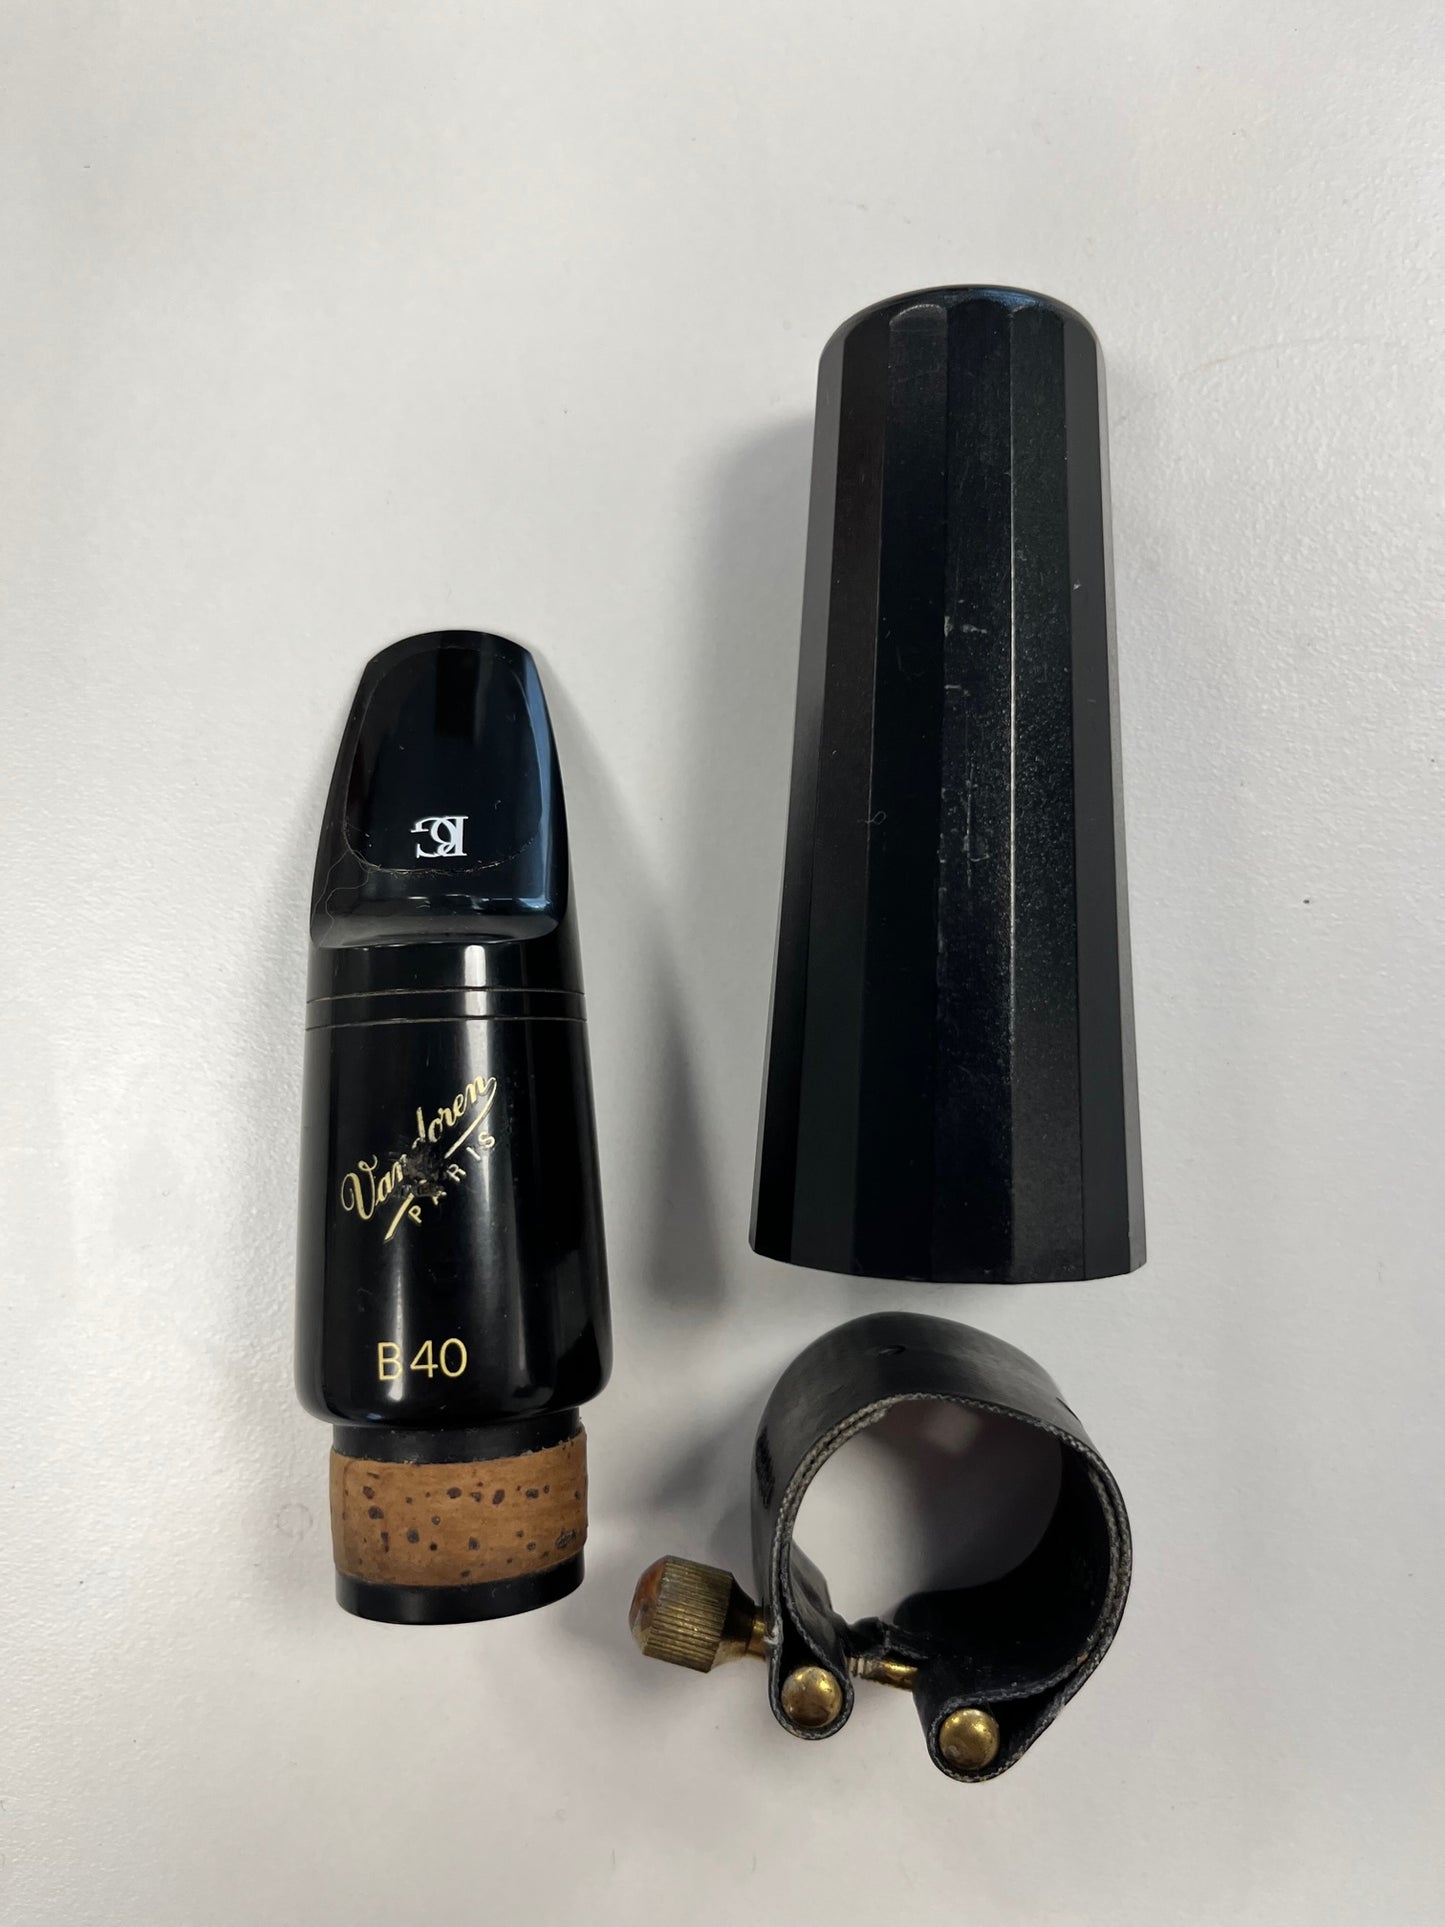 Vandoren B40 Clarinet mouthpiece with Rovner cap and Ligature (s/h)